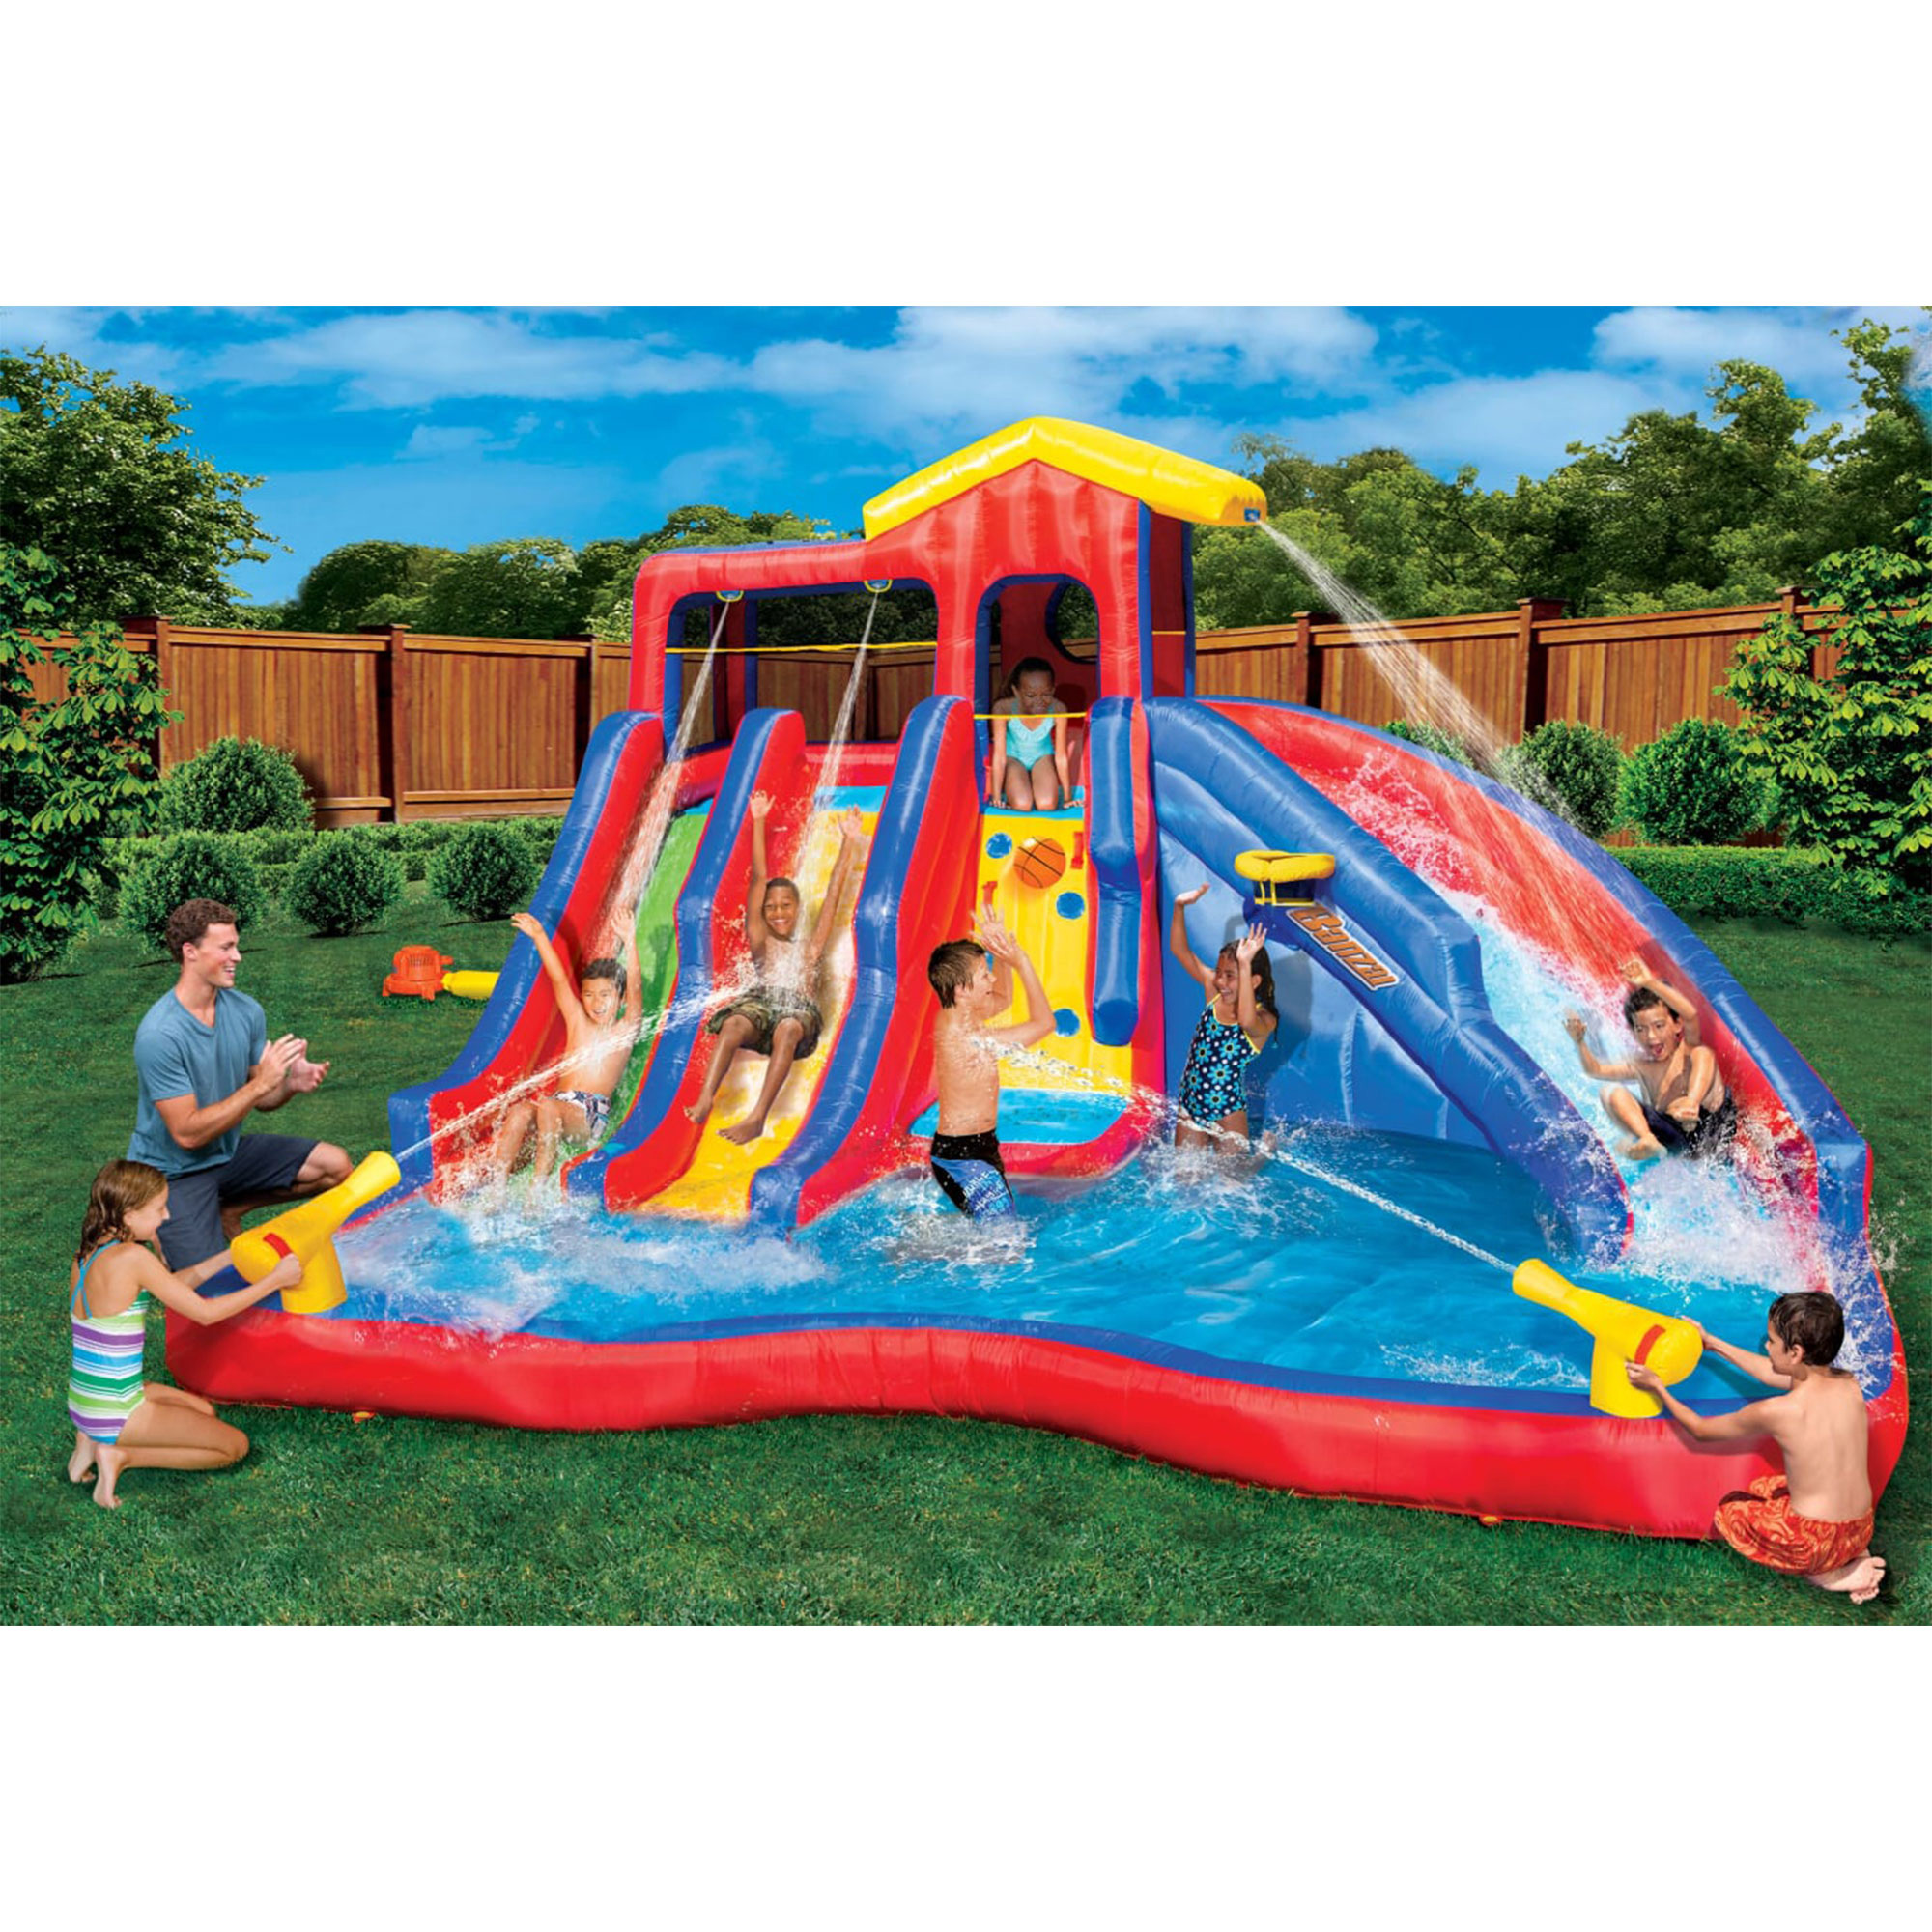 Banzai Hydro Blast Kids Inflatable Backyard Waterpark Pool Play Center - image 3 of 10